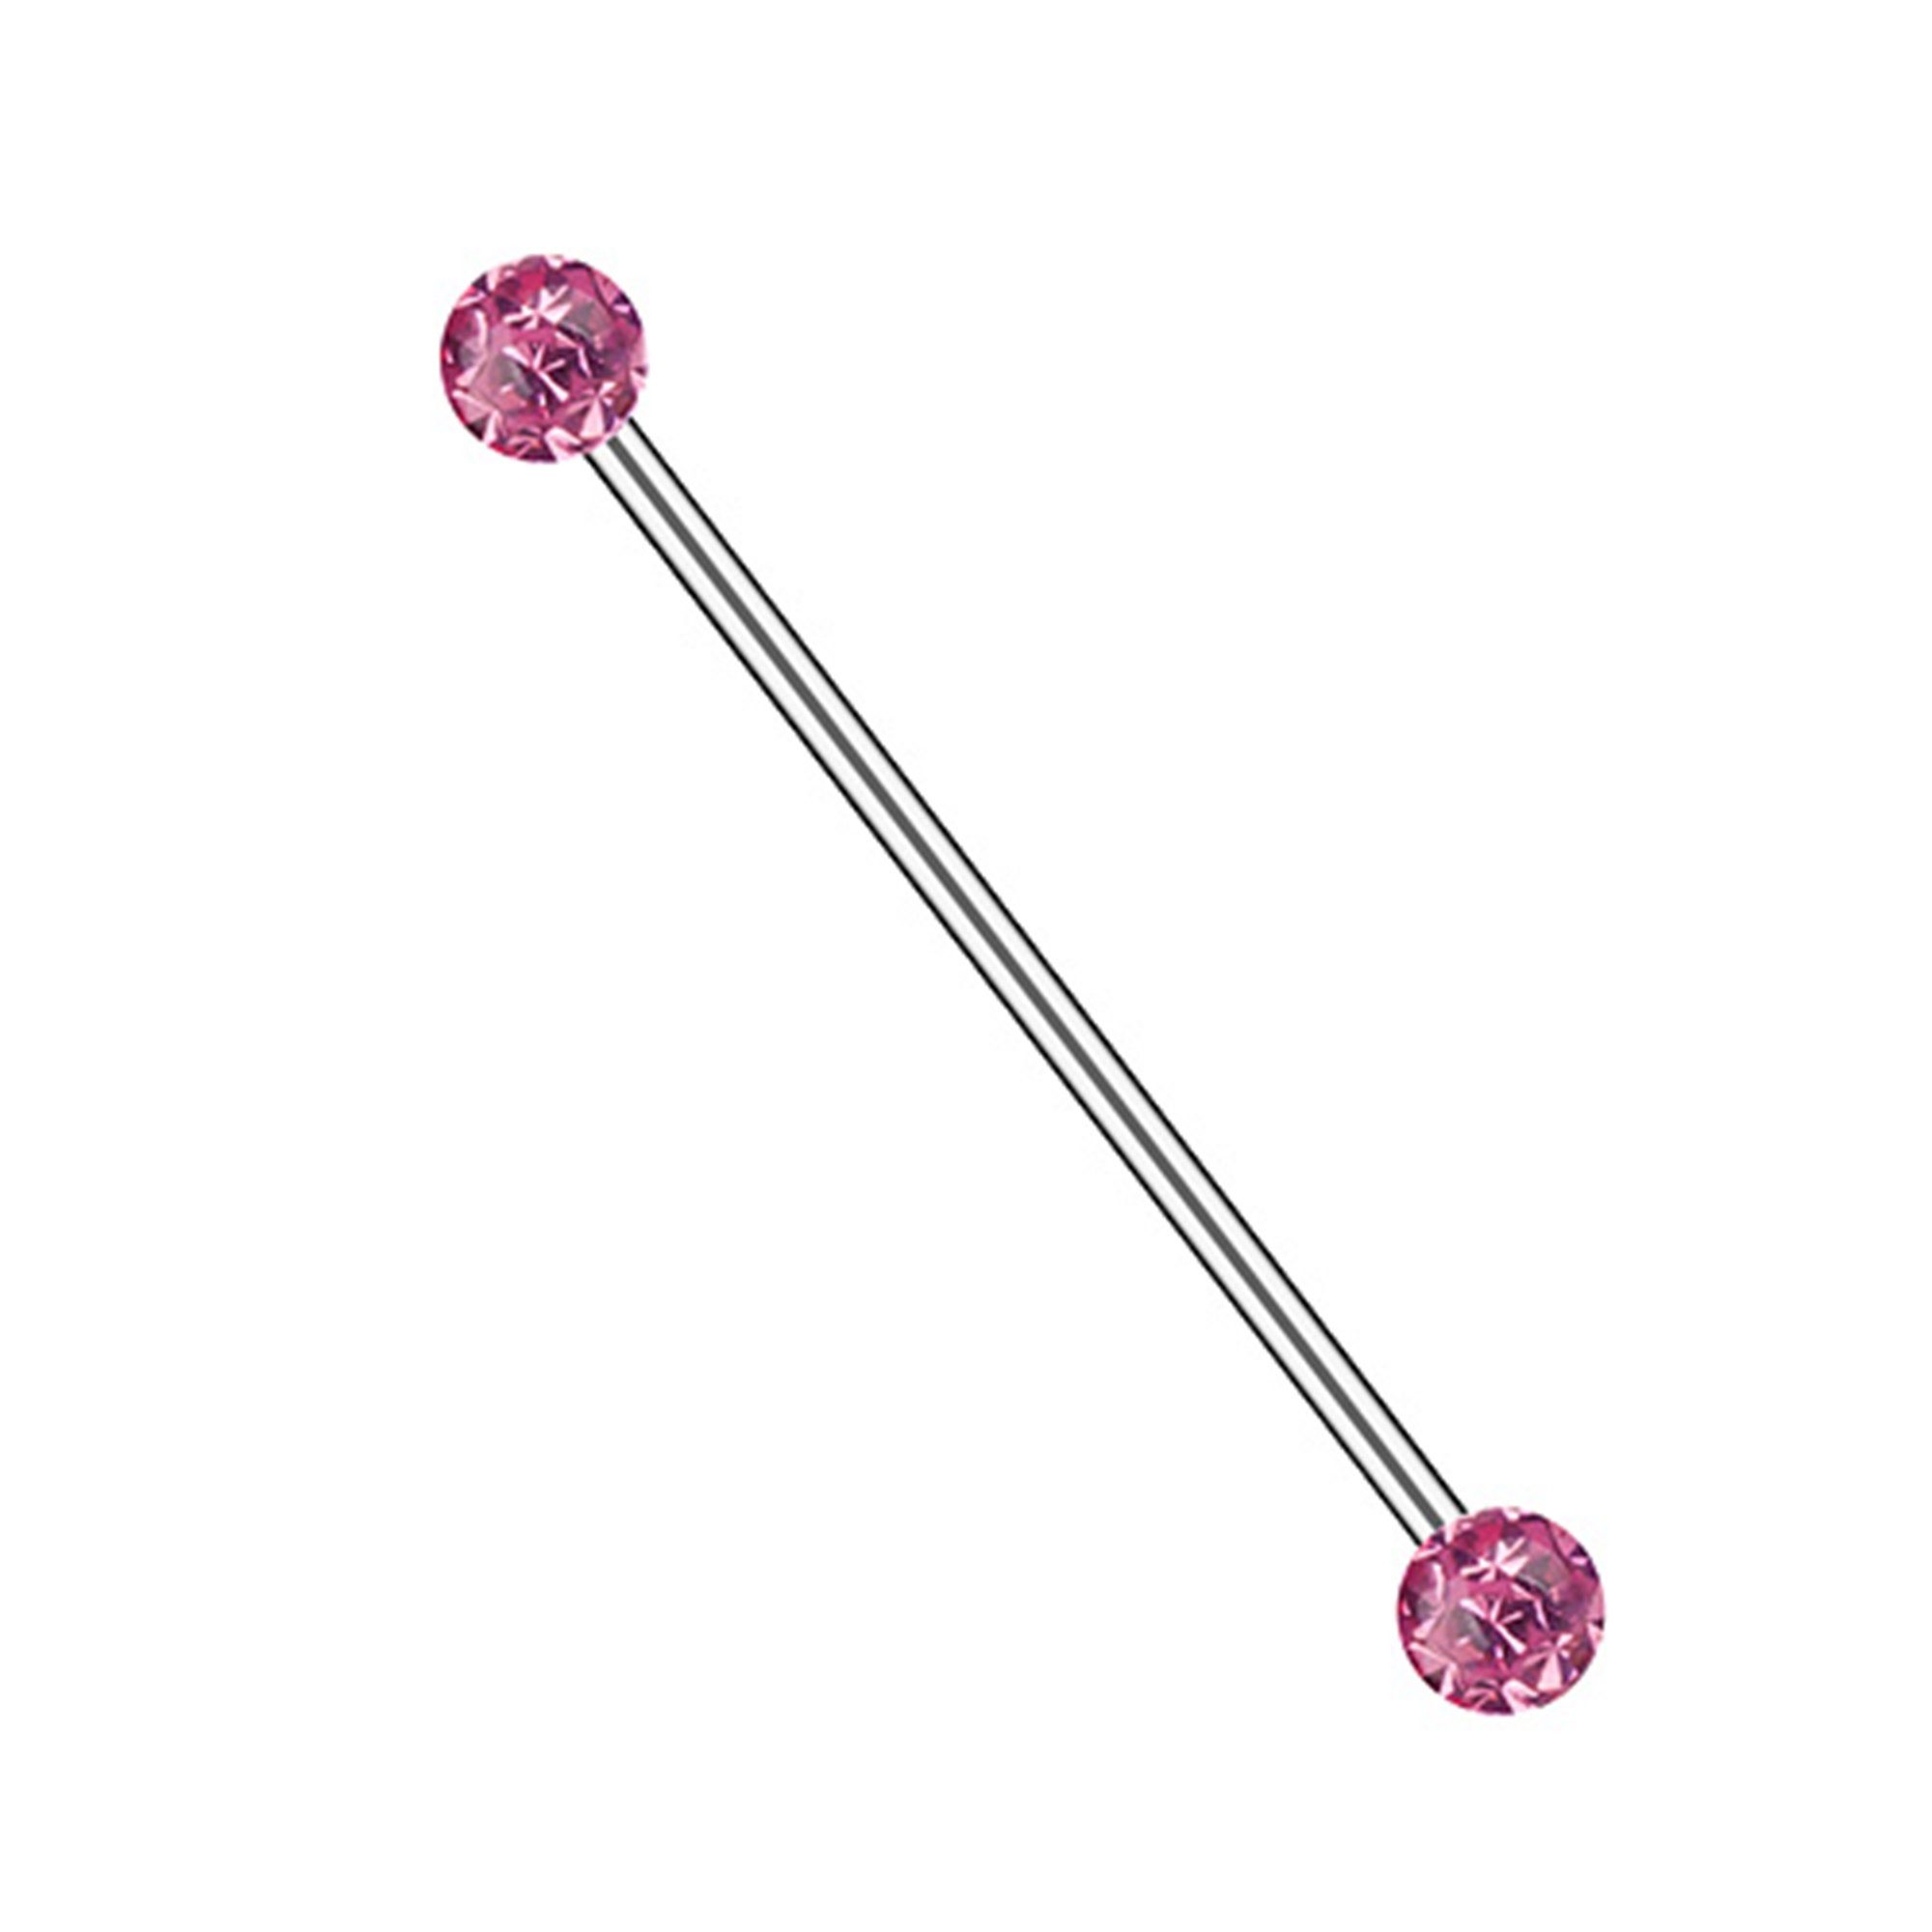 Taffstyle Piercing-Set Piercing Pink Kristall Ohrpiercing Intim Tragus Ohr Barbell Kugeln Piercing Stab Industrial Cartilage Brust, Hantel Helix